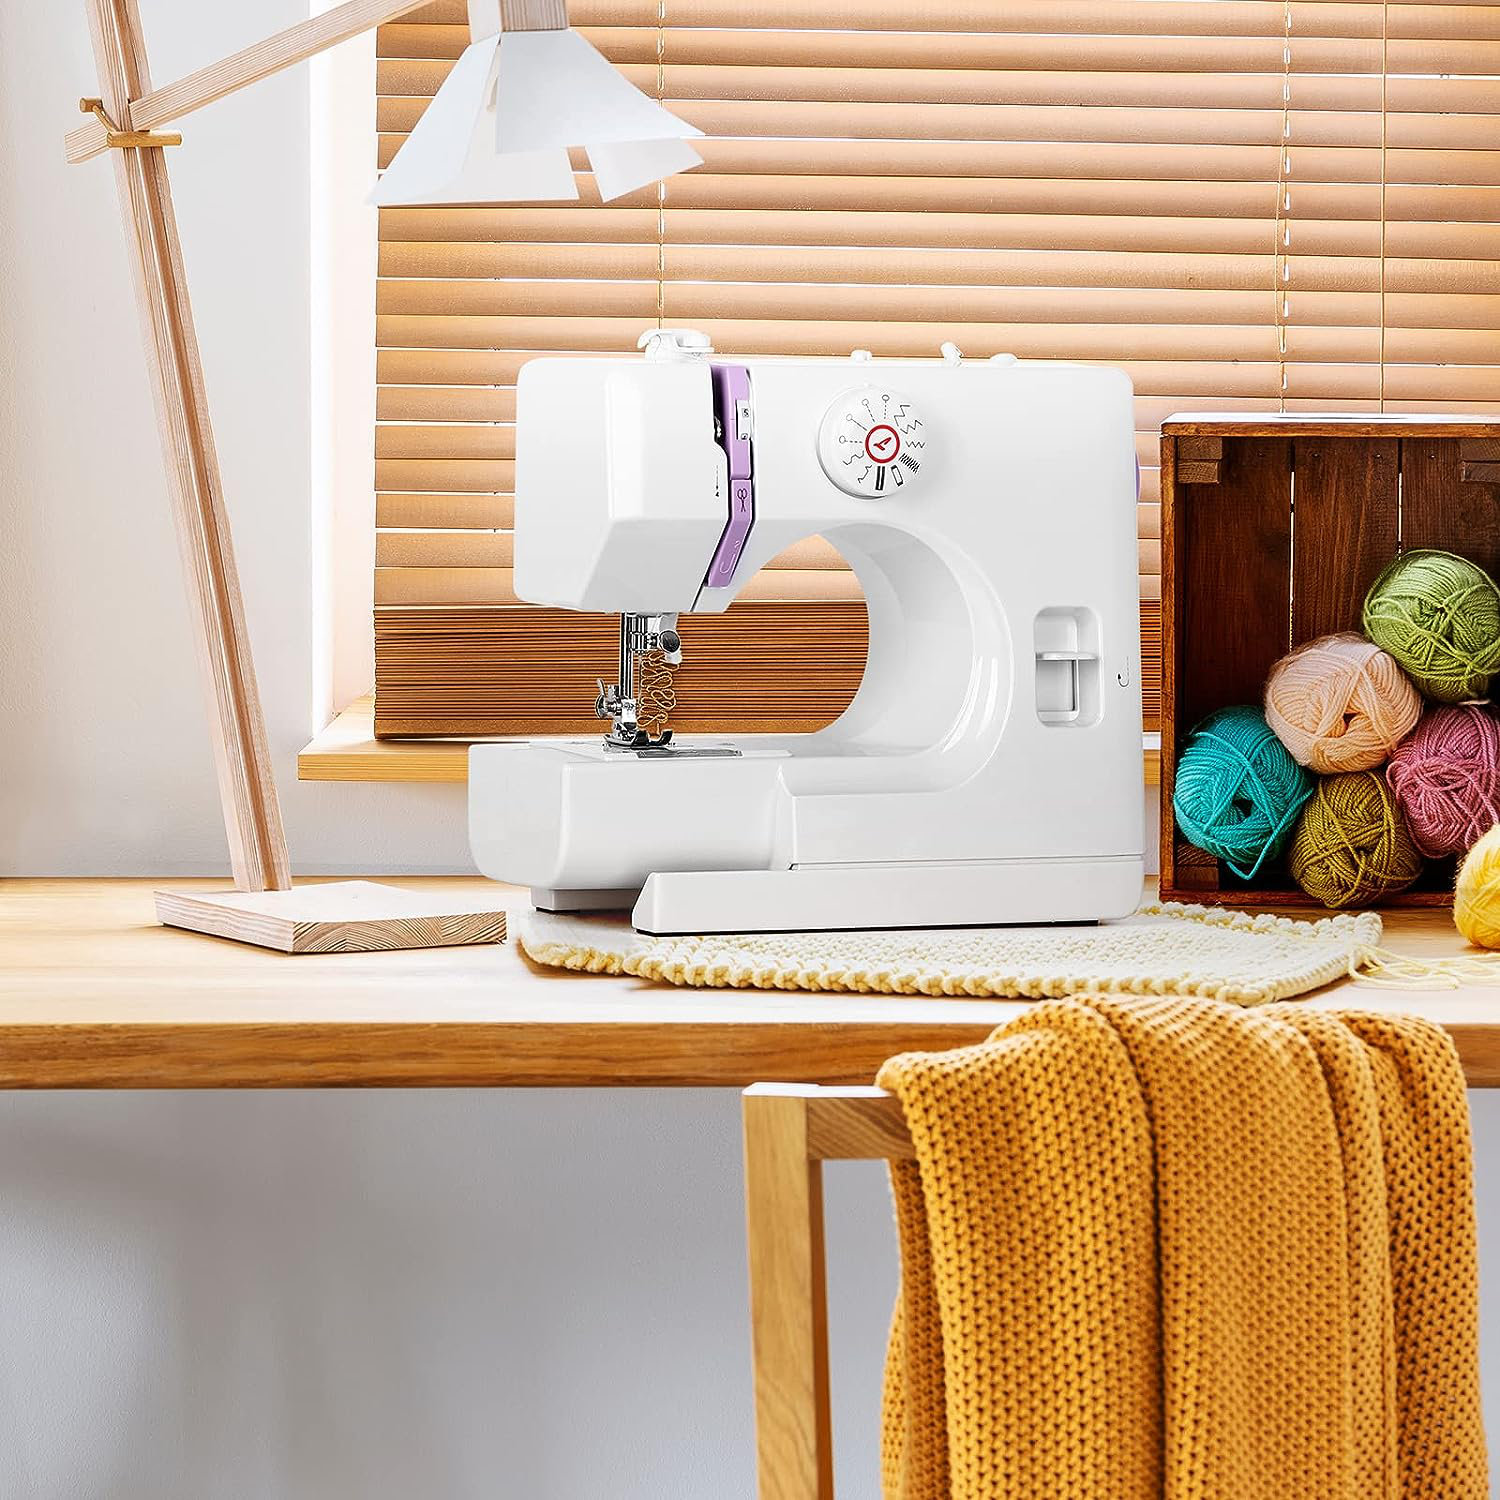 Brand New 59 Stitches Sewing Machine, Reverse Sewing, Professional